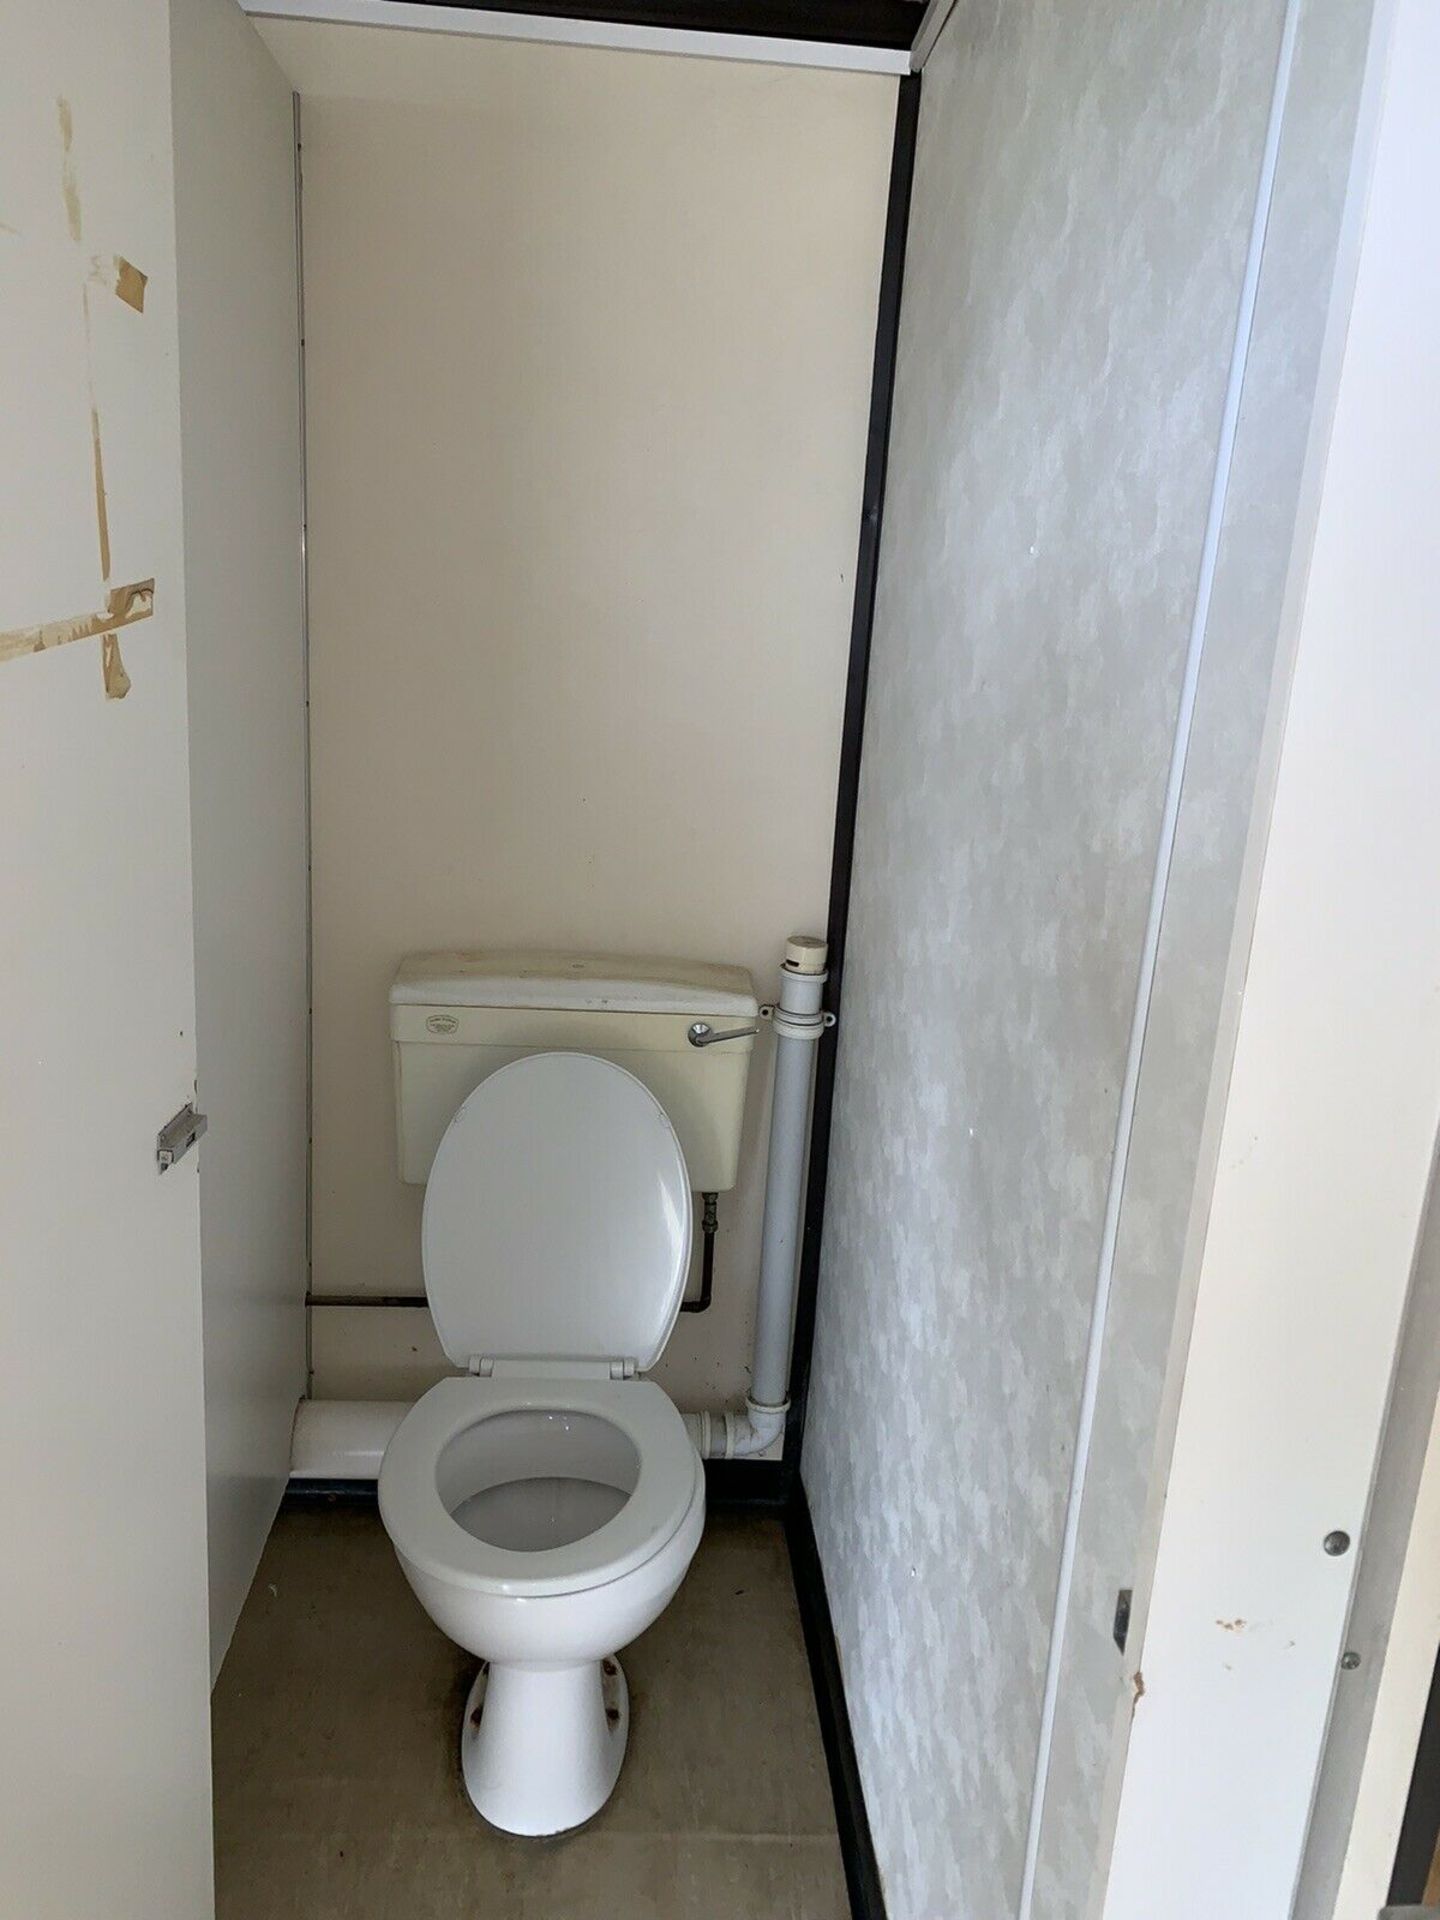 Portable Toilet Block Shower Block Toilet Containe - Image 10 of 12